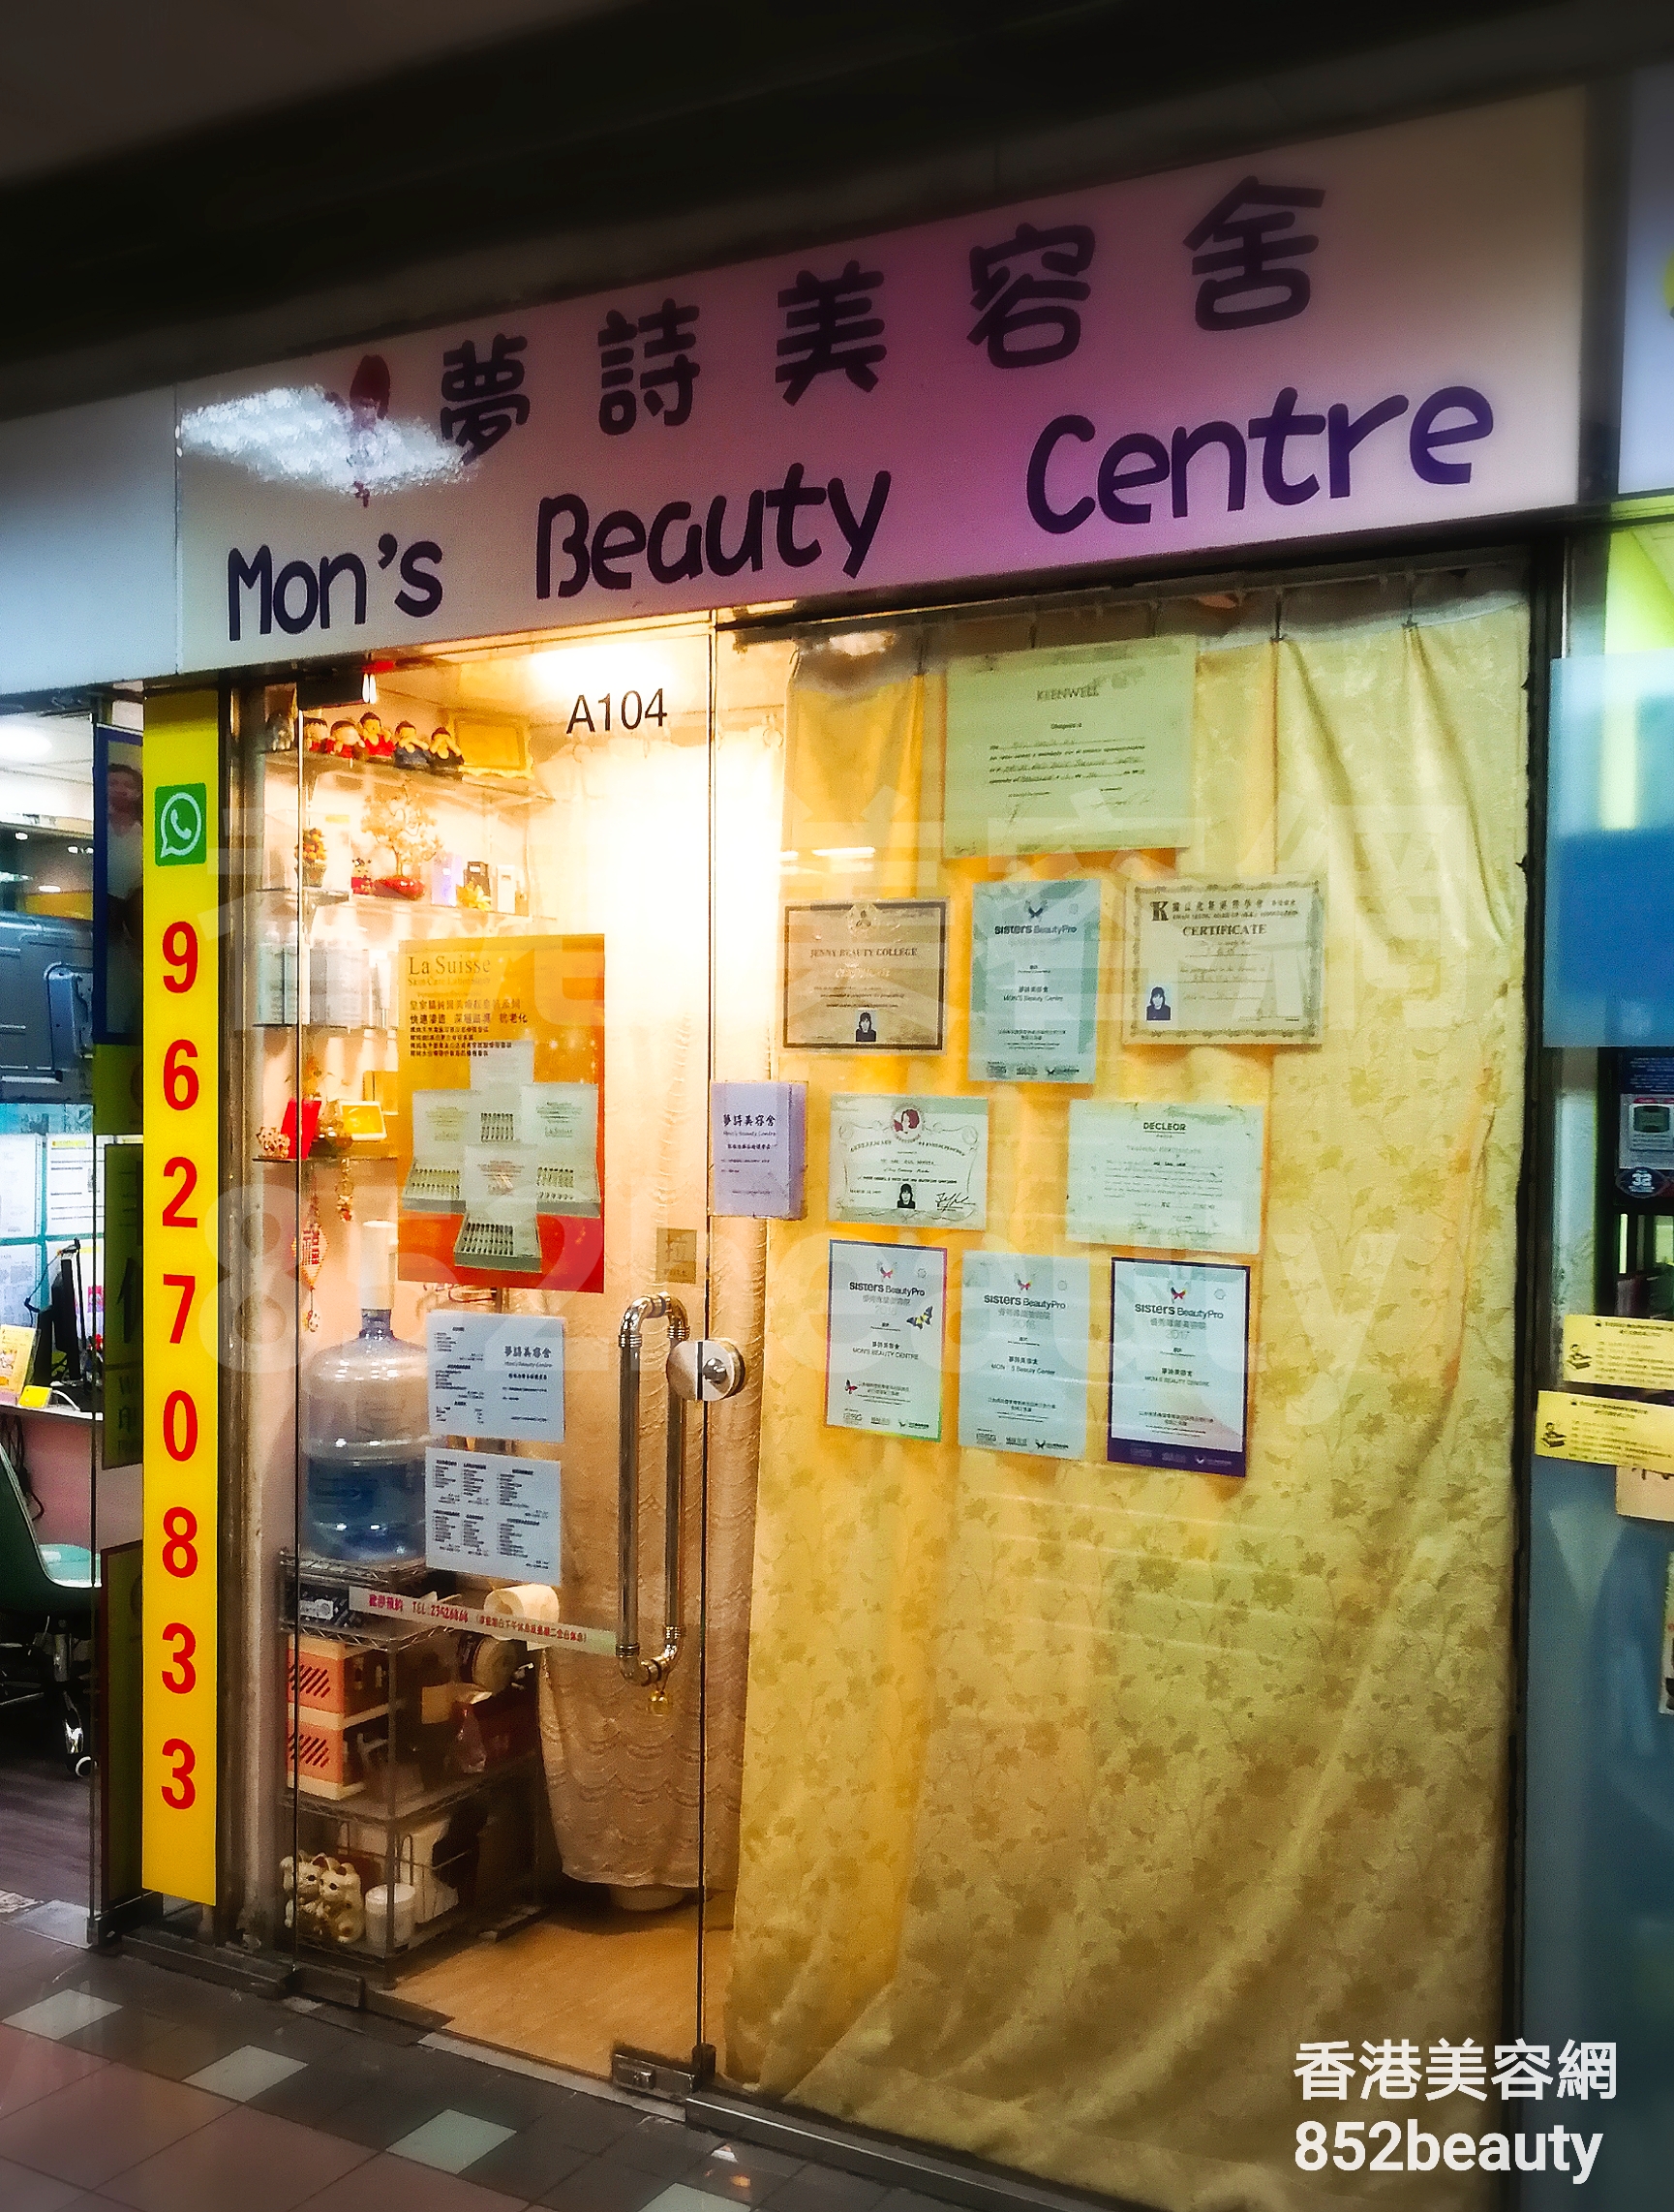 Facial Care: 夢詩美容舍 Mon's Beauty Centre